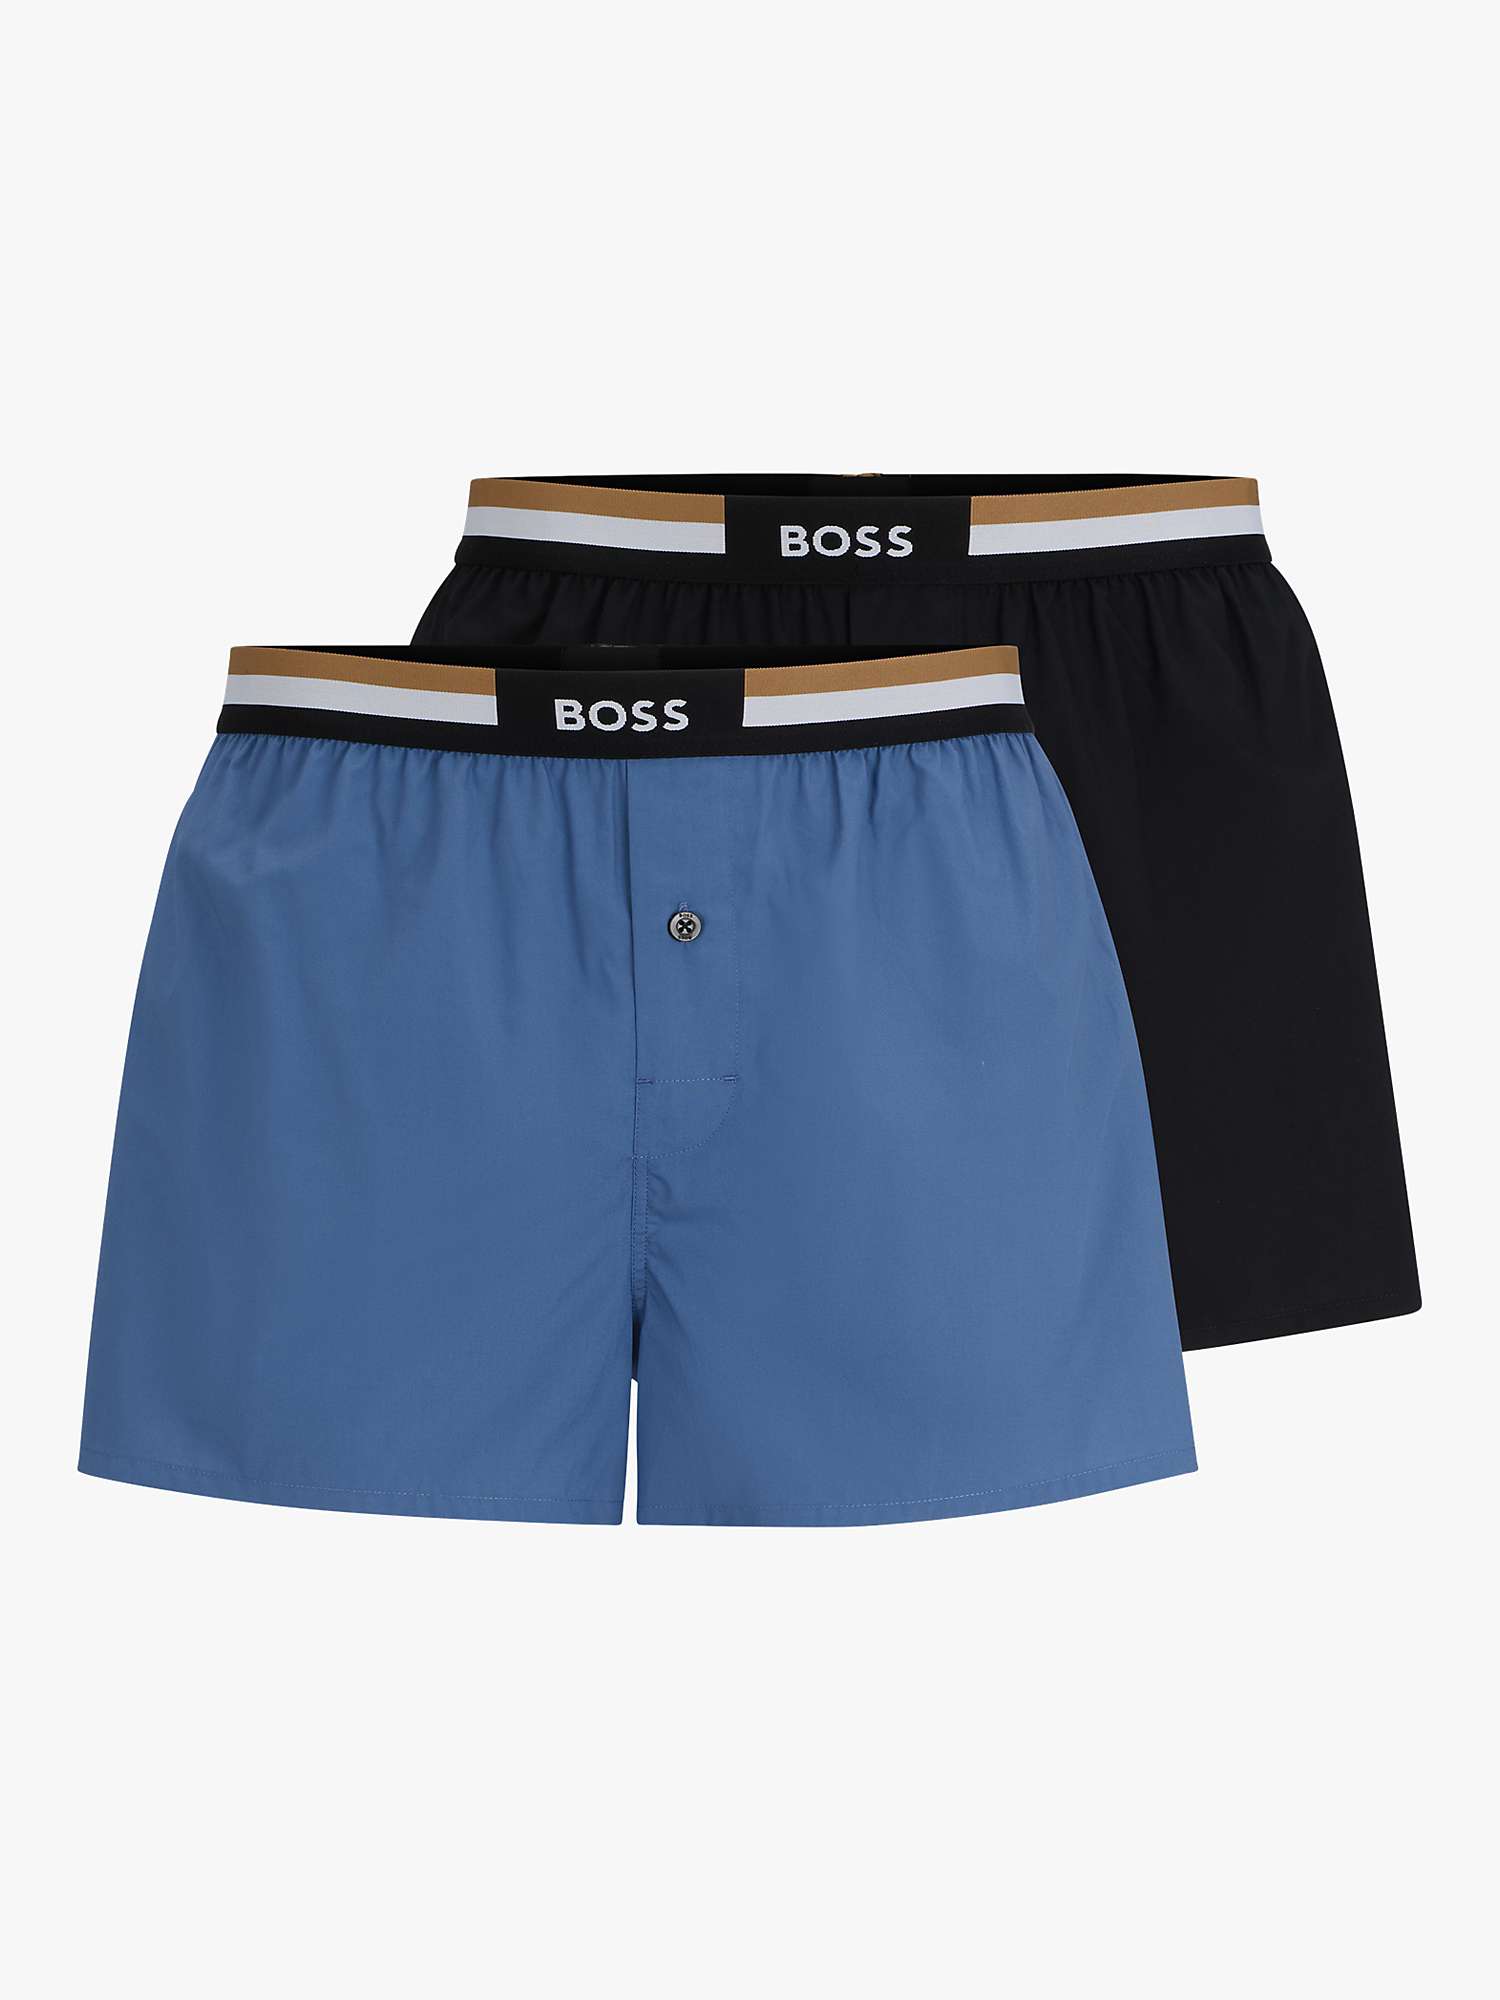 Buy BOSS Poplin Boxers, Pack of 2, Open Blue Online at johnlewis.com